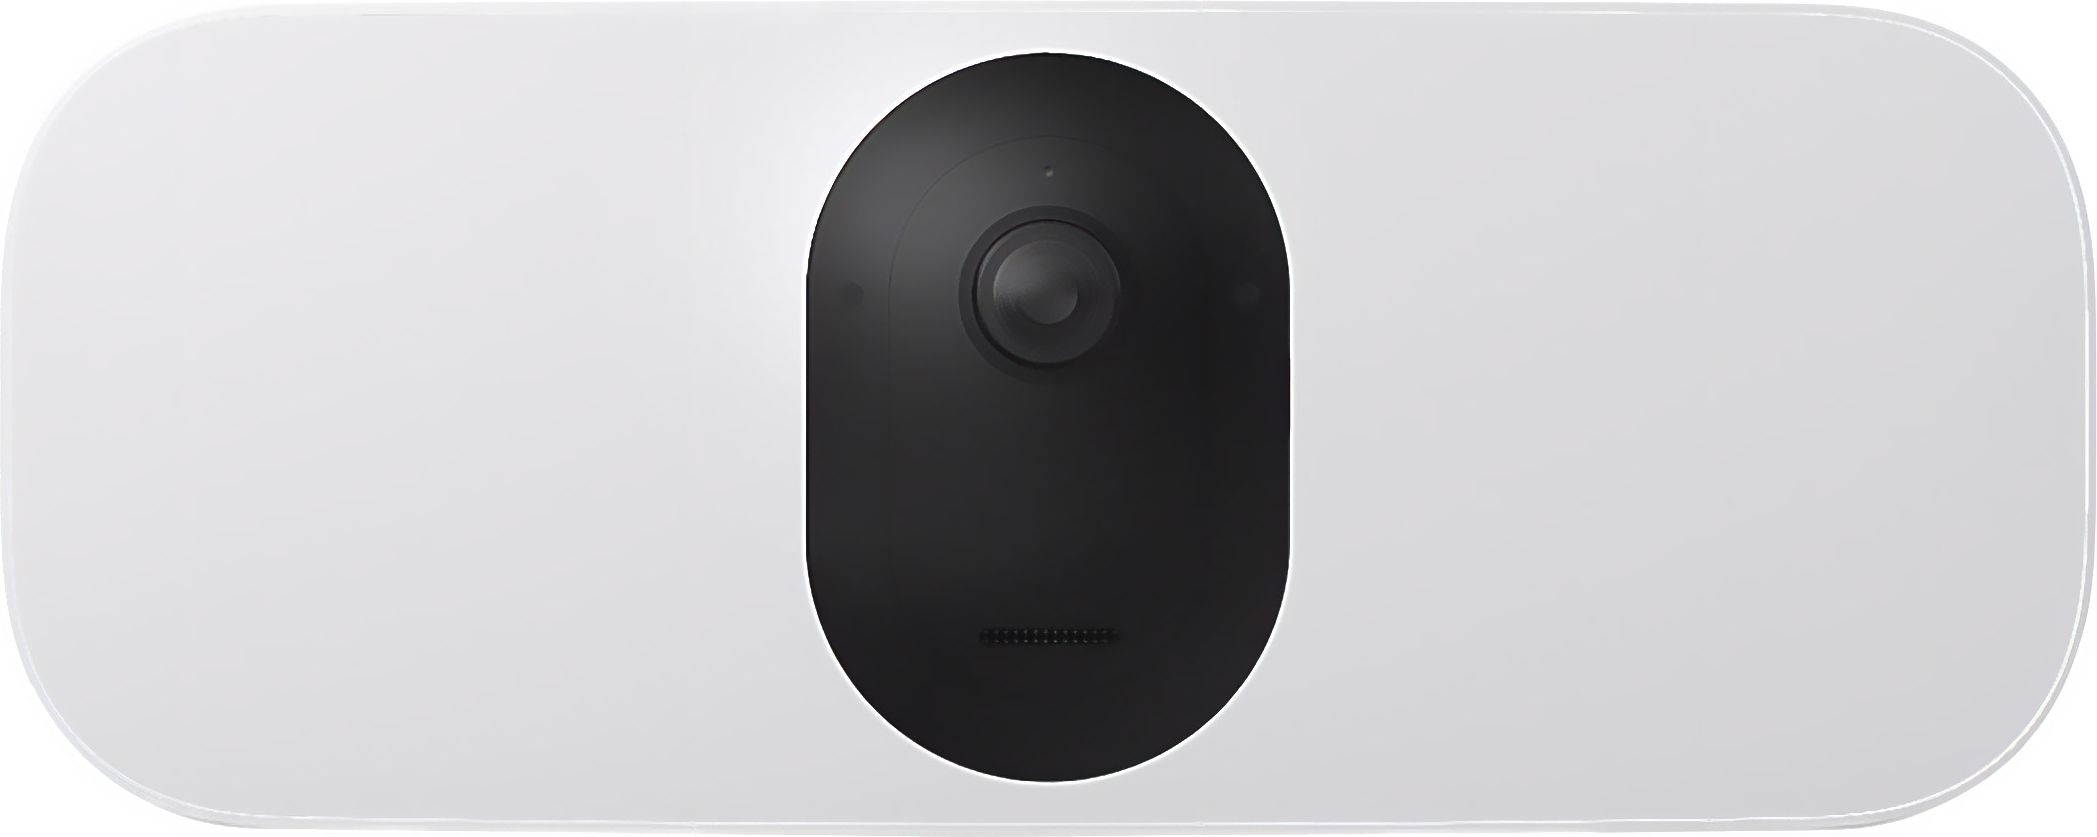 Arlo Pro 3 Floodlight HD Smart Home Security Camera - White, White